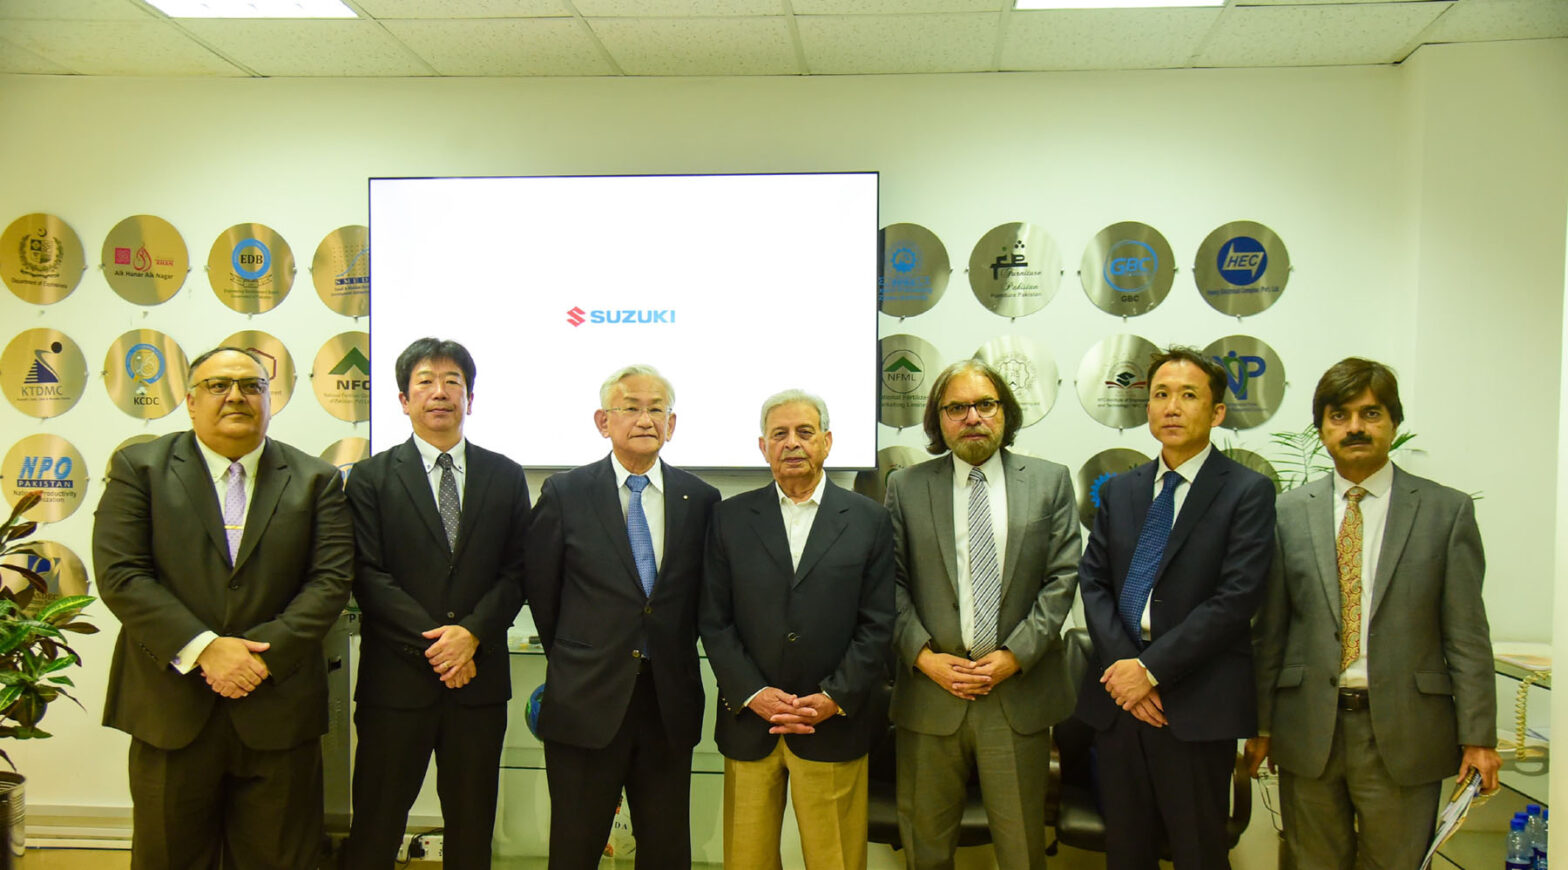 Suzuki Motor Corporation to set up a biogas plant in Karachi